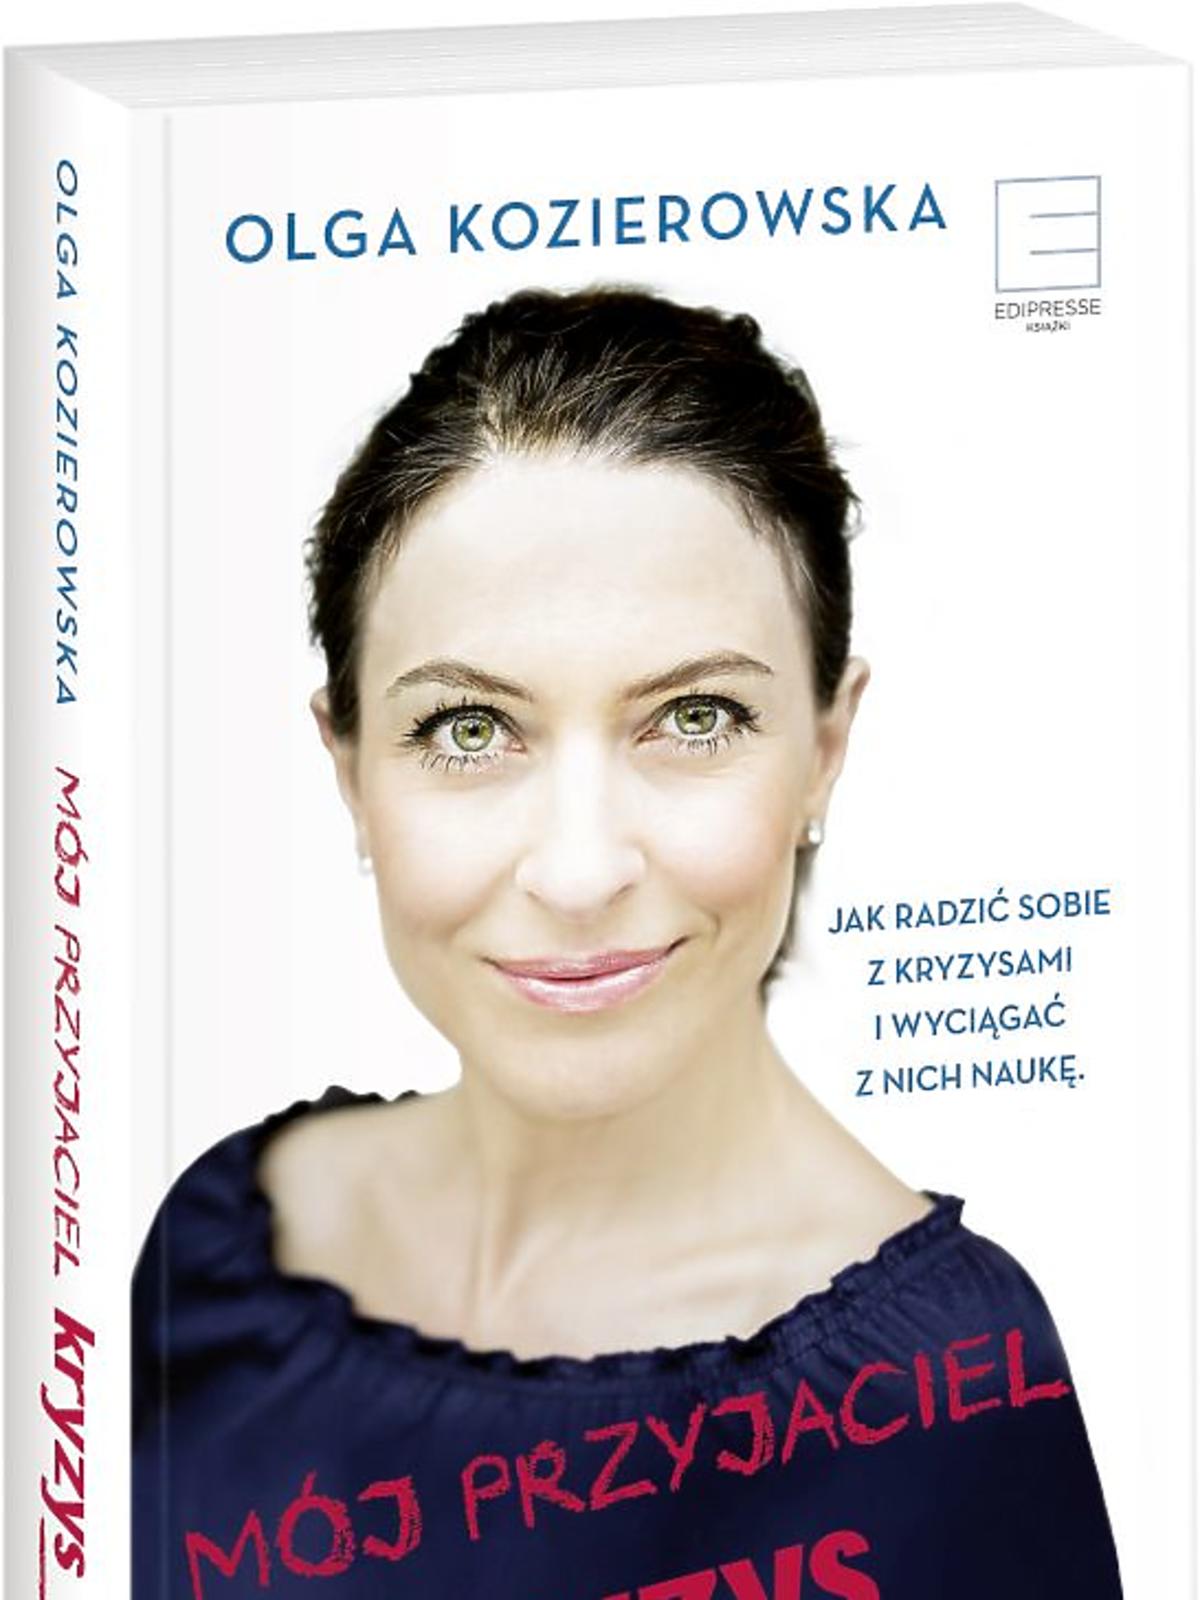 Olga Kozierowska, 